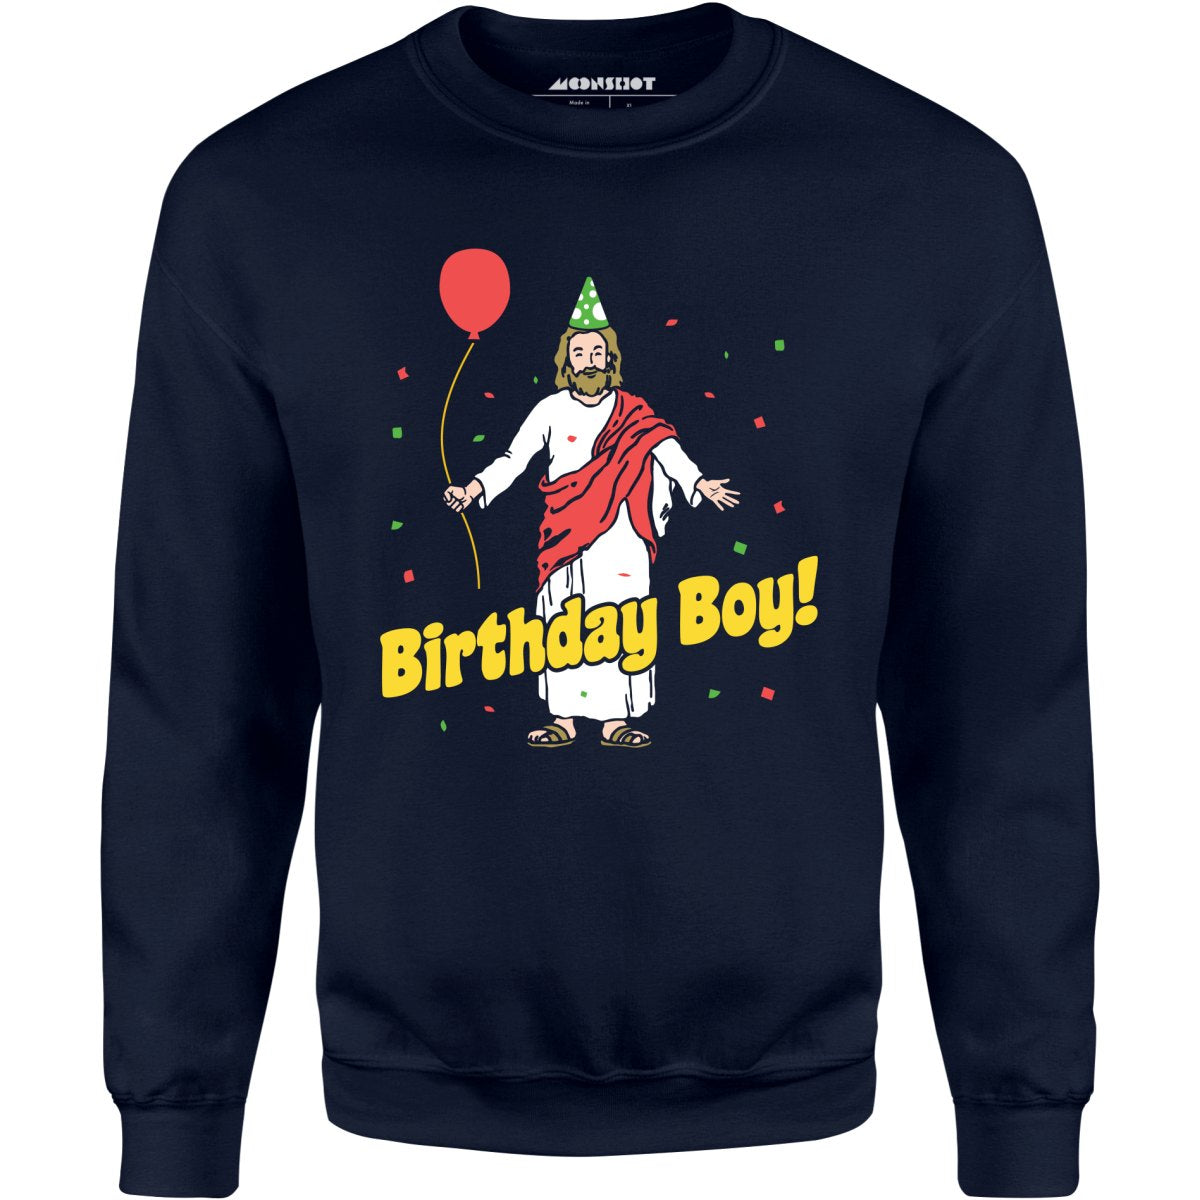 Birthday Boy - Unisex Sweatshirt